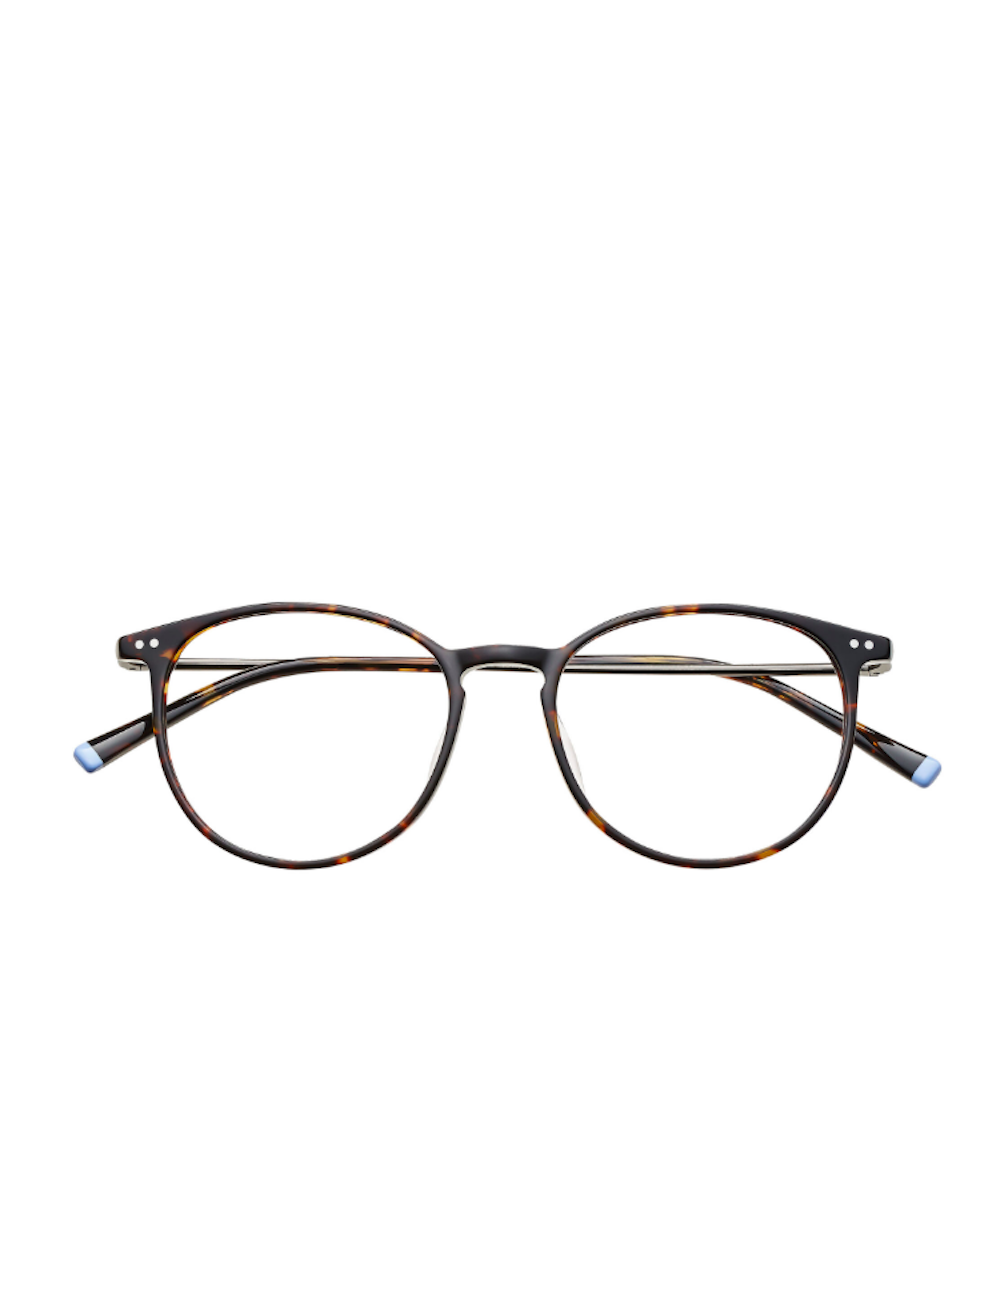 Humphrey's eyewear 581069 60 occhiali da vista rotondi - Ottica Mauro